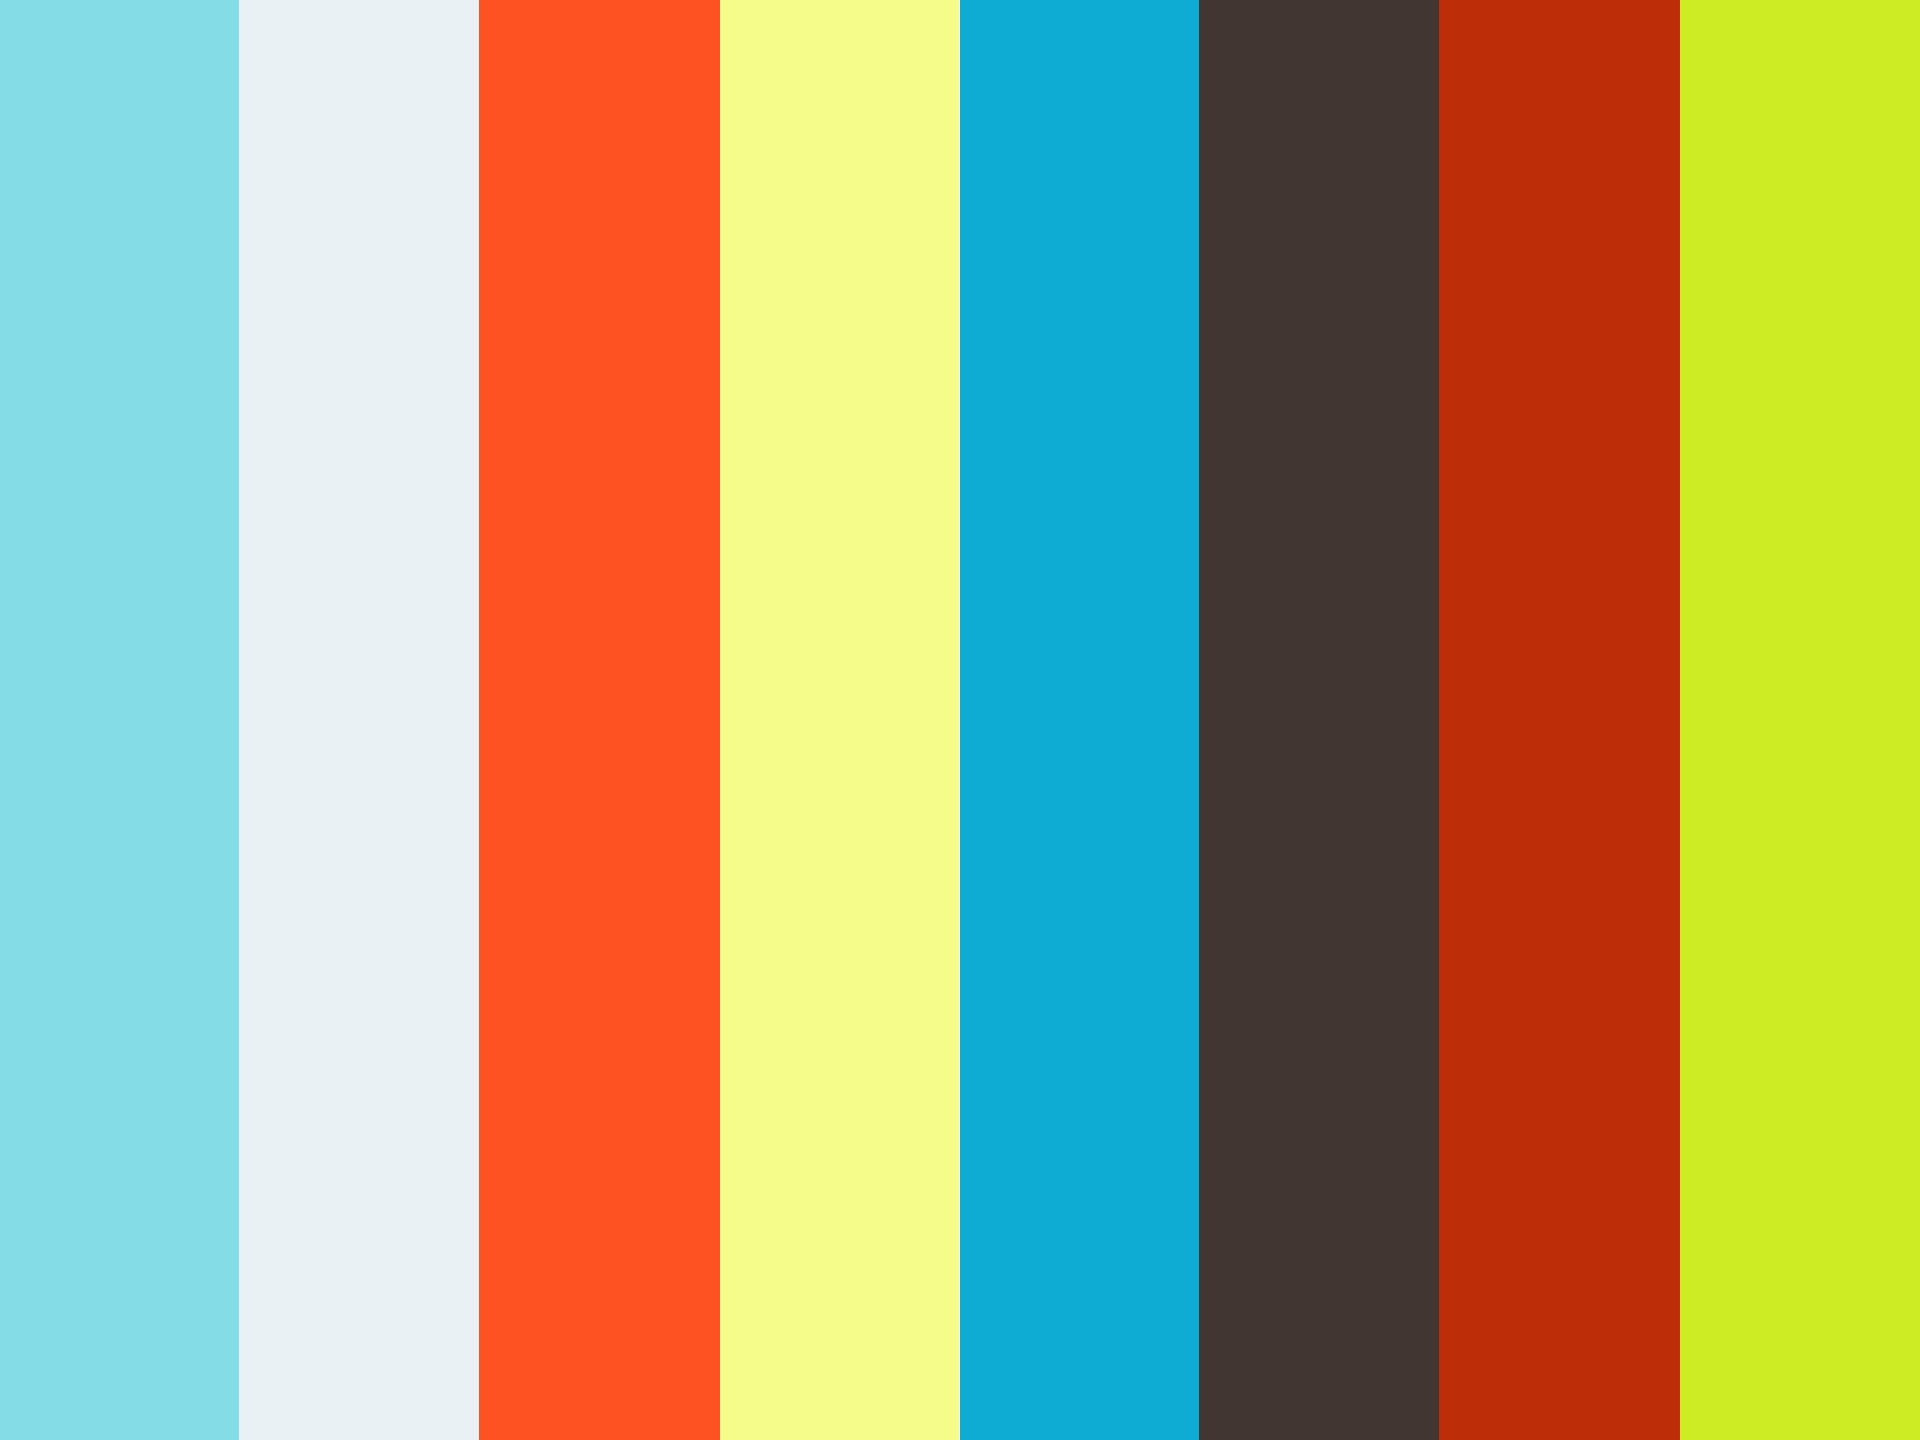 basic color grading davinci resolve 14 lumix